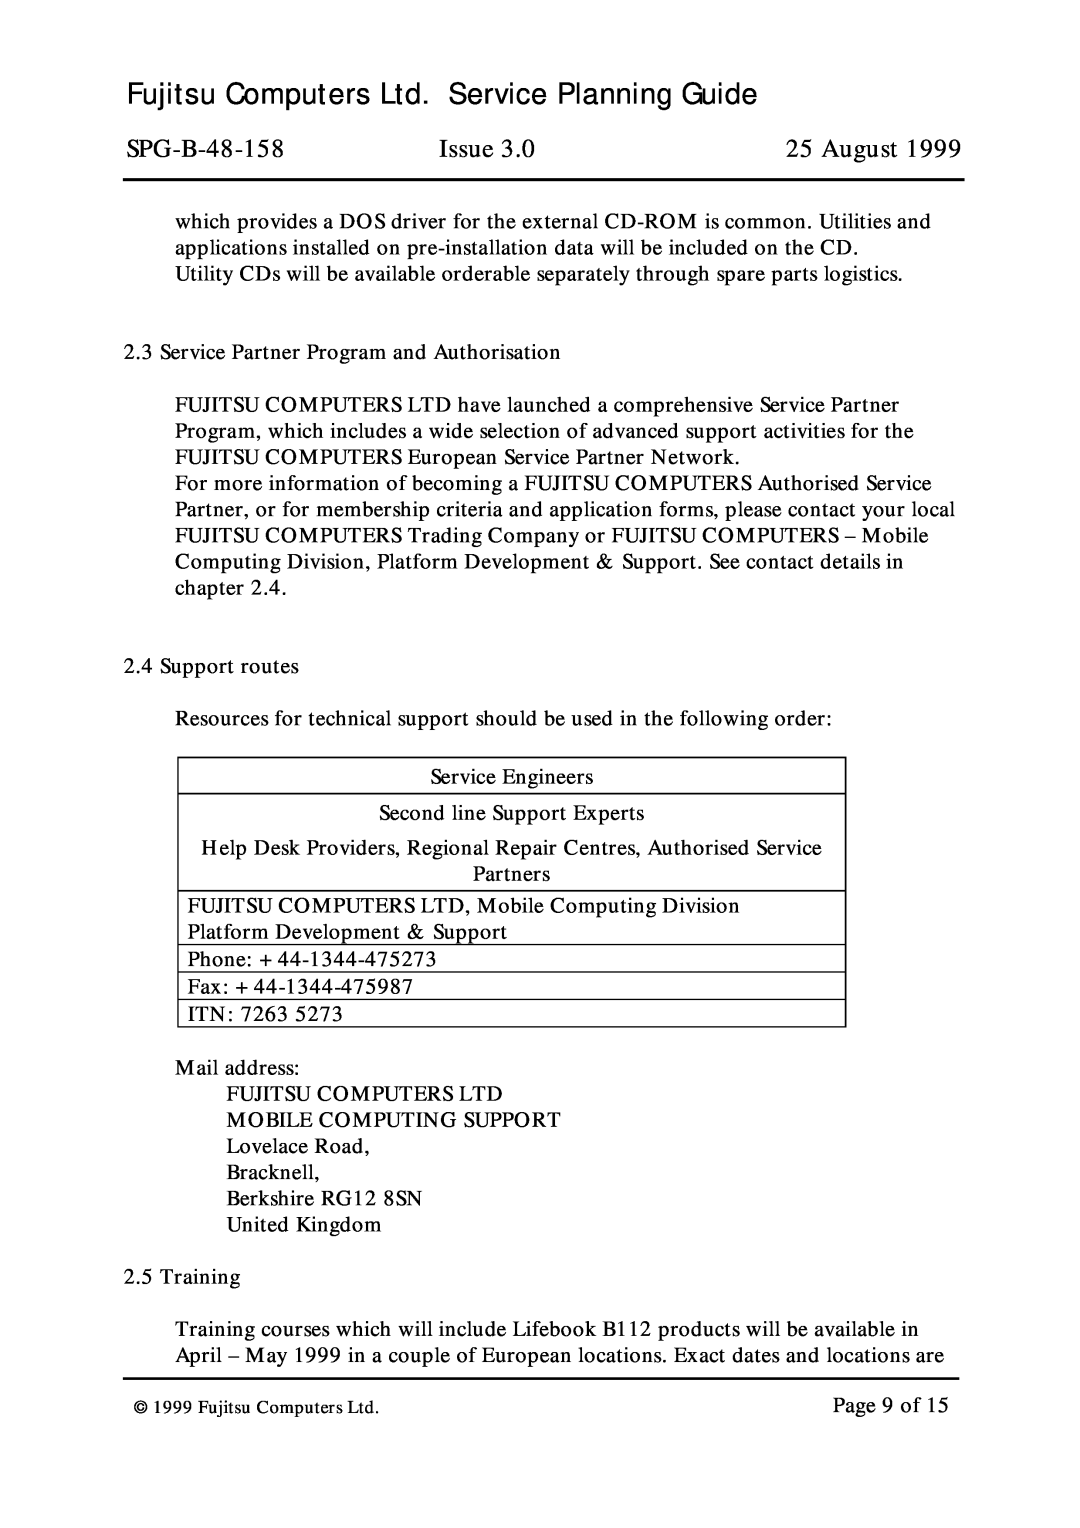 Fujitsu SPG-B-48-158 warranty Issue, August, Service Partner Program and Authorisation 